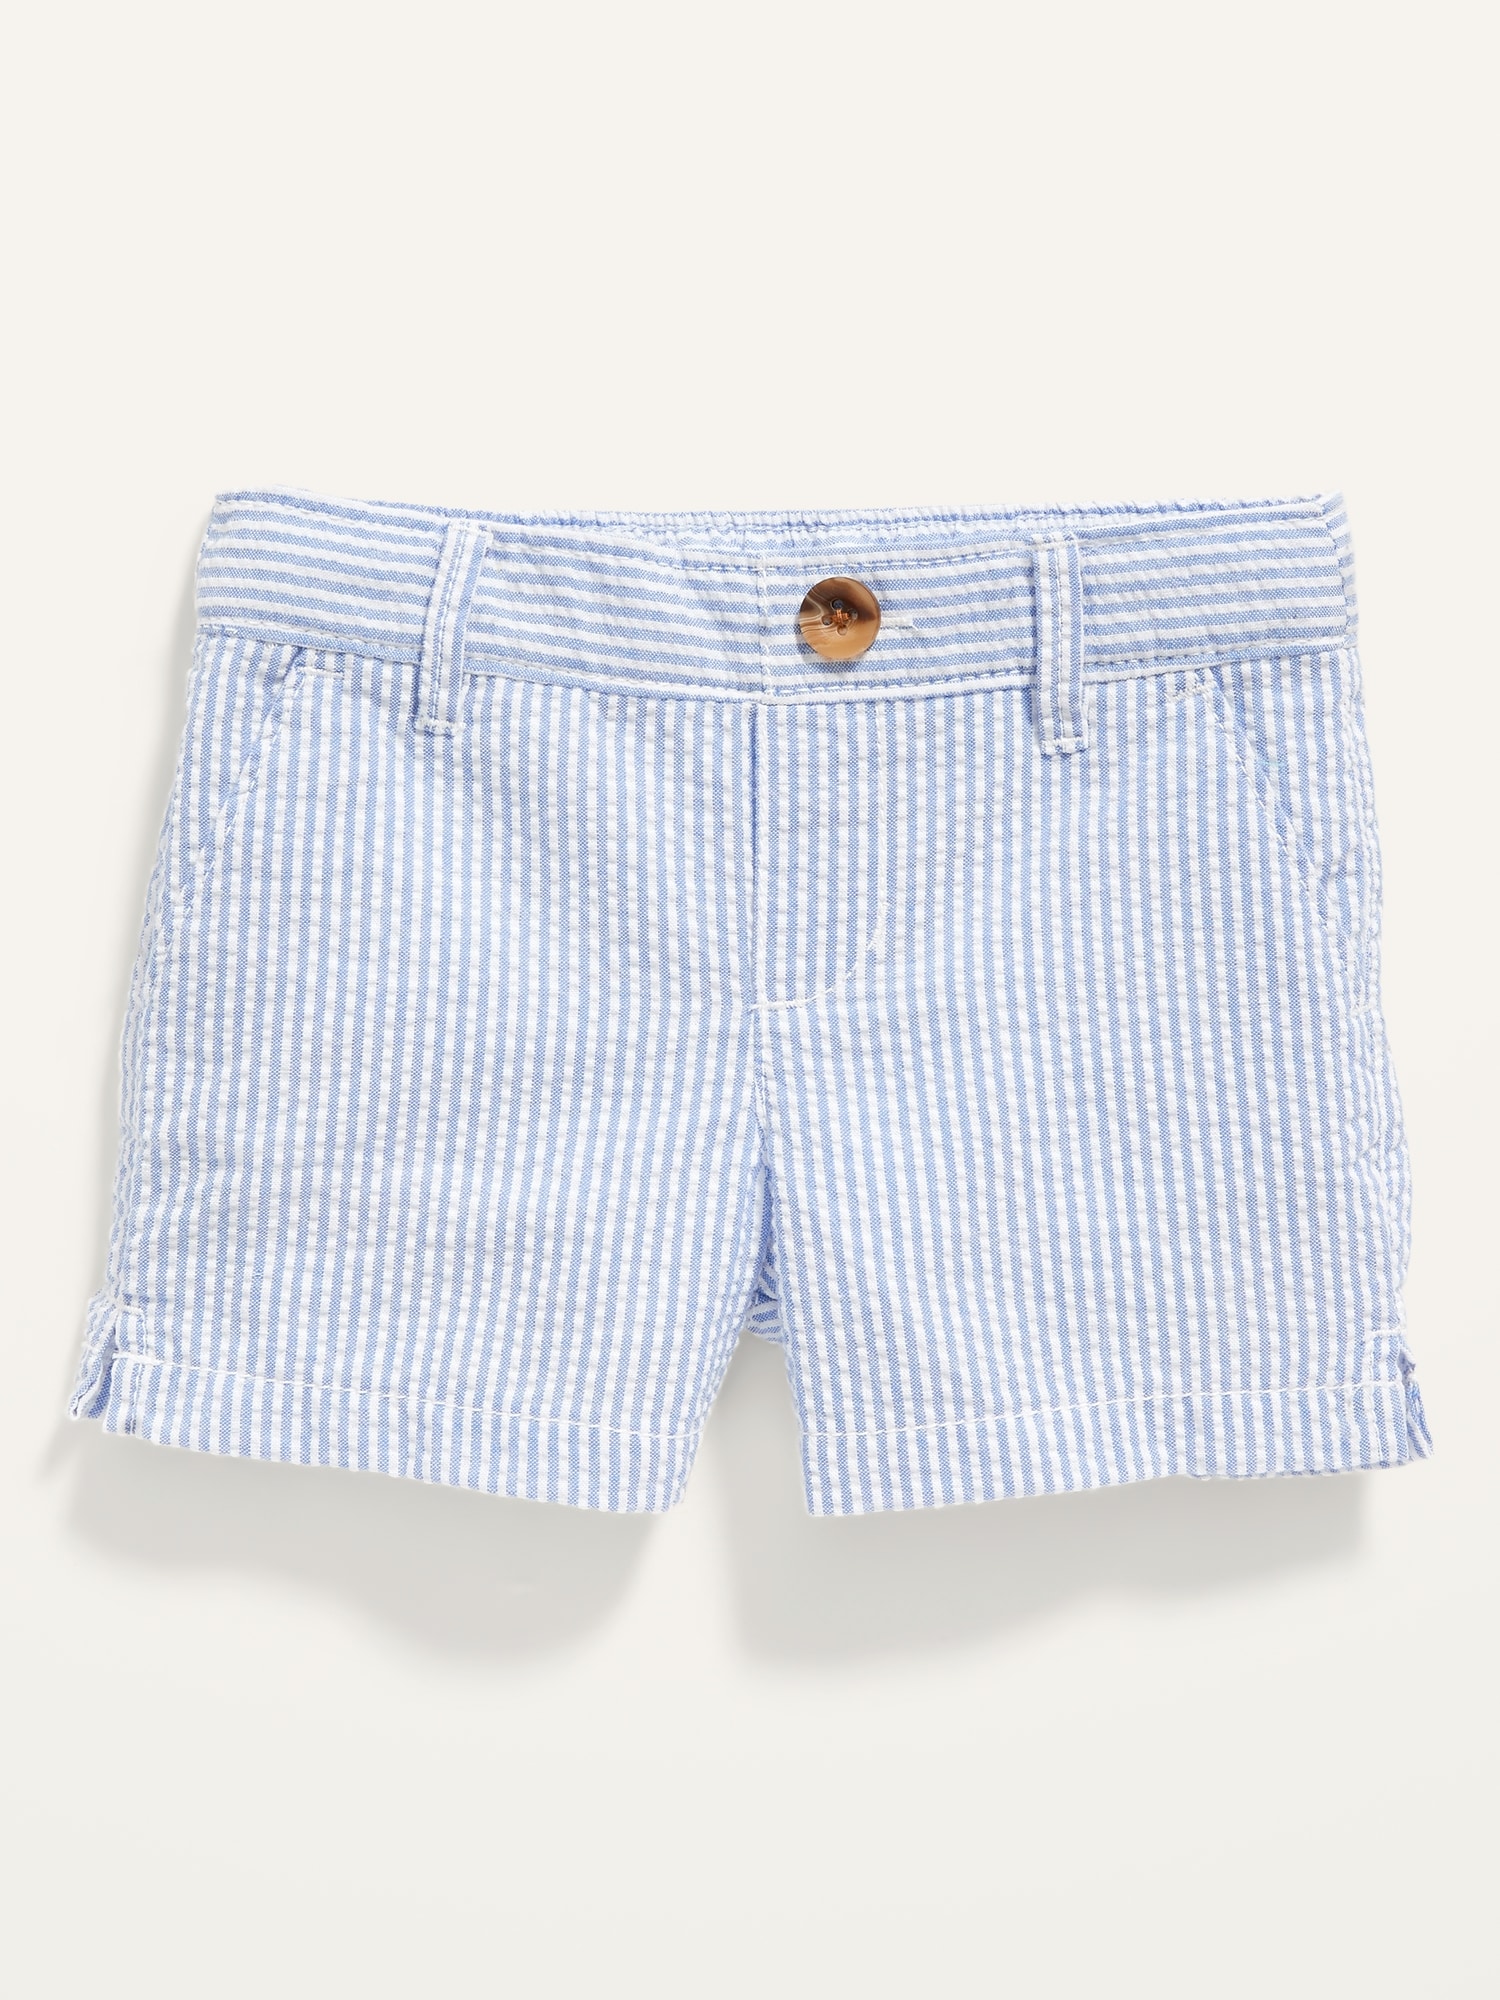 Seersucker-Stripe Pull-On Chino Shorts for Toddler Girls